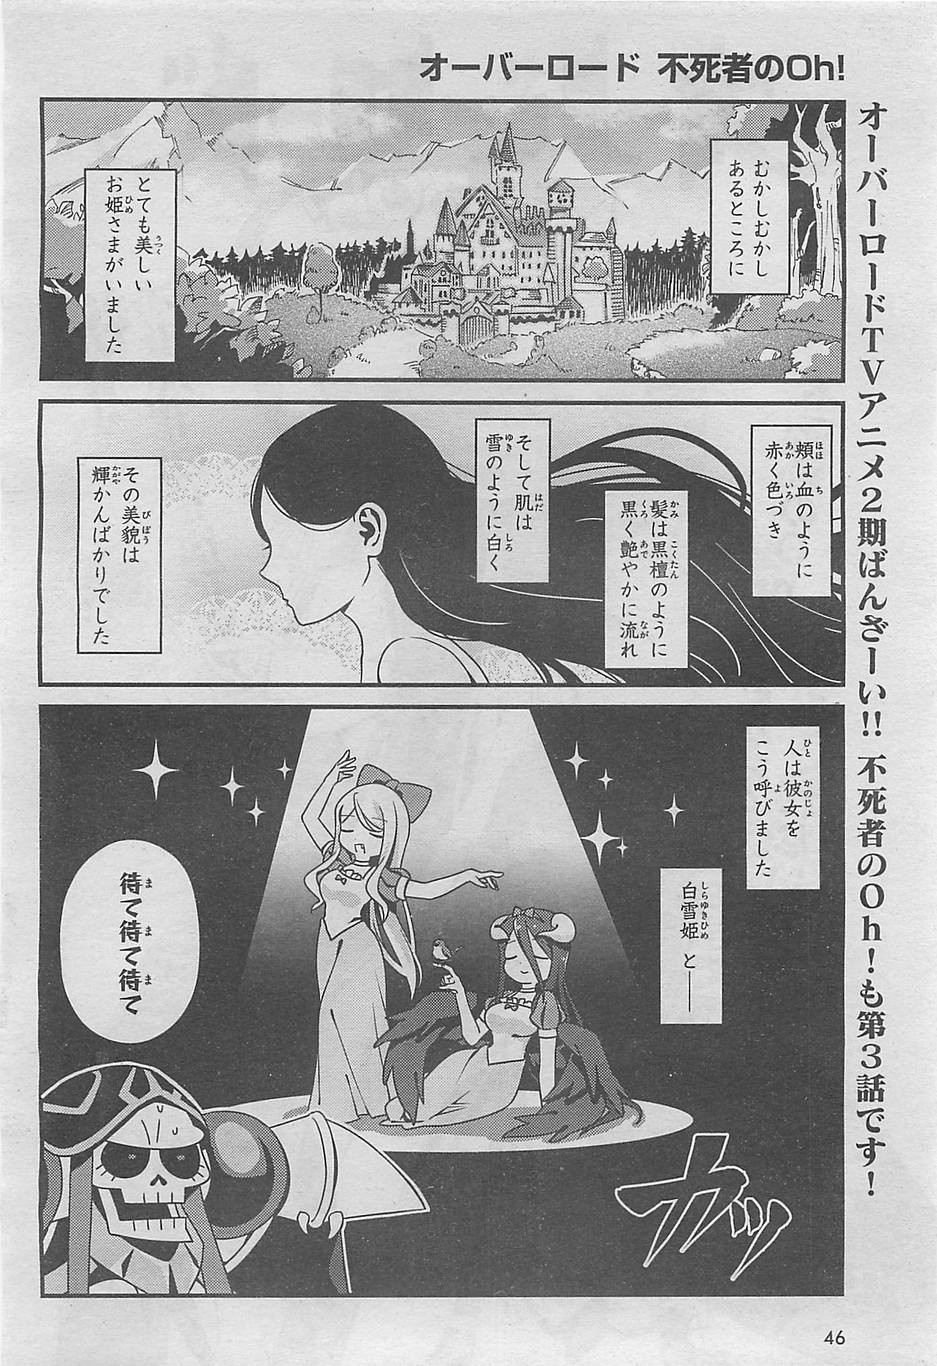 Overlord Fushisha No Oh Chapter 03 Page 2 Raw Sen Manga